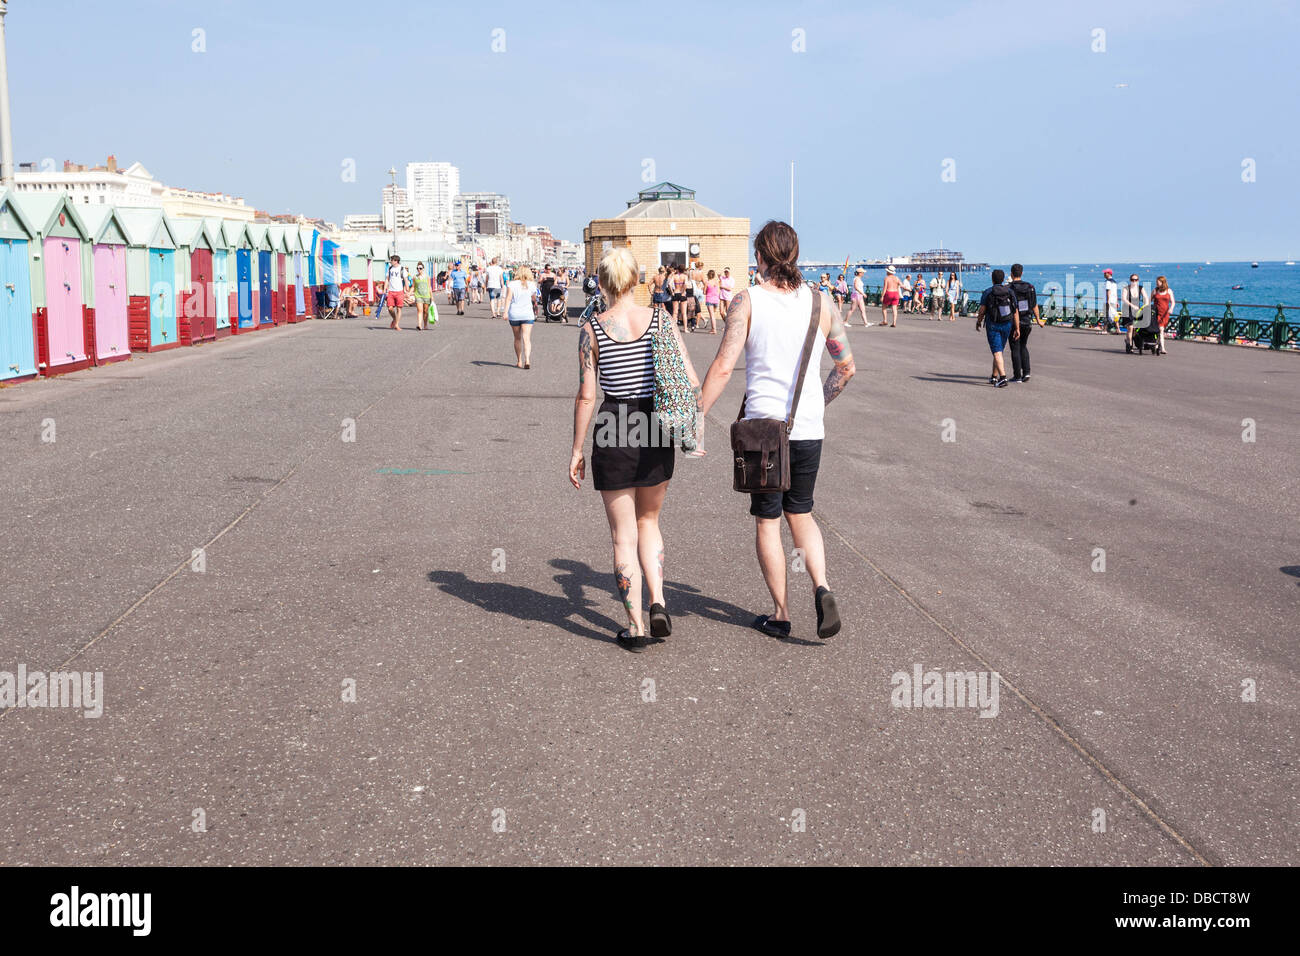 Fußgänger, ein Spaziergang entlang der Strandpromenade, Brighton, England, UK Stockfoto